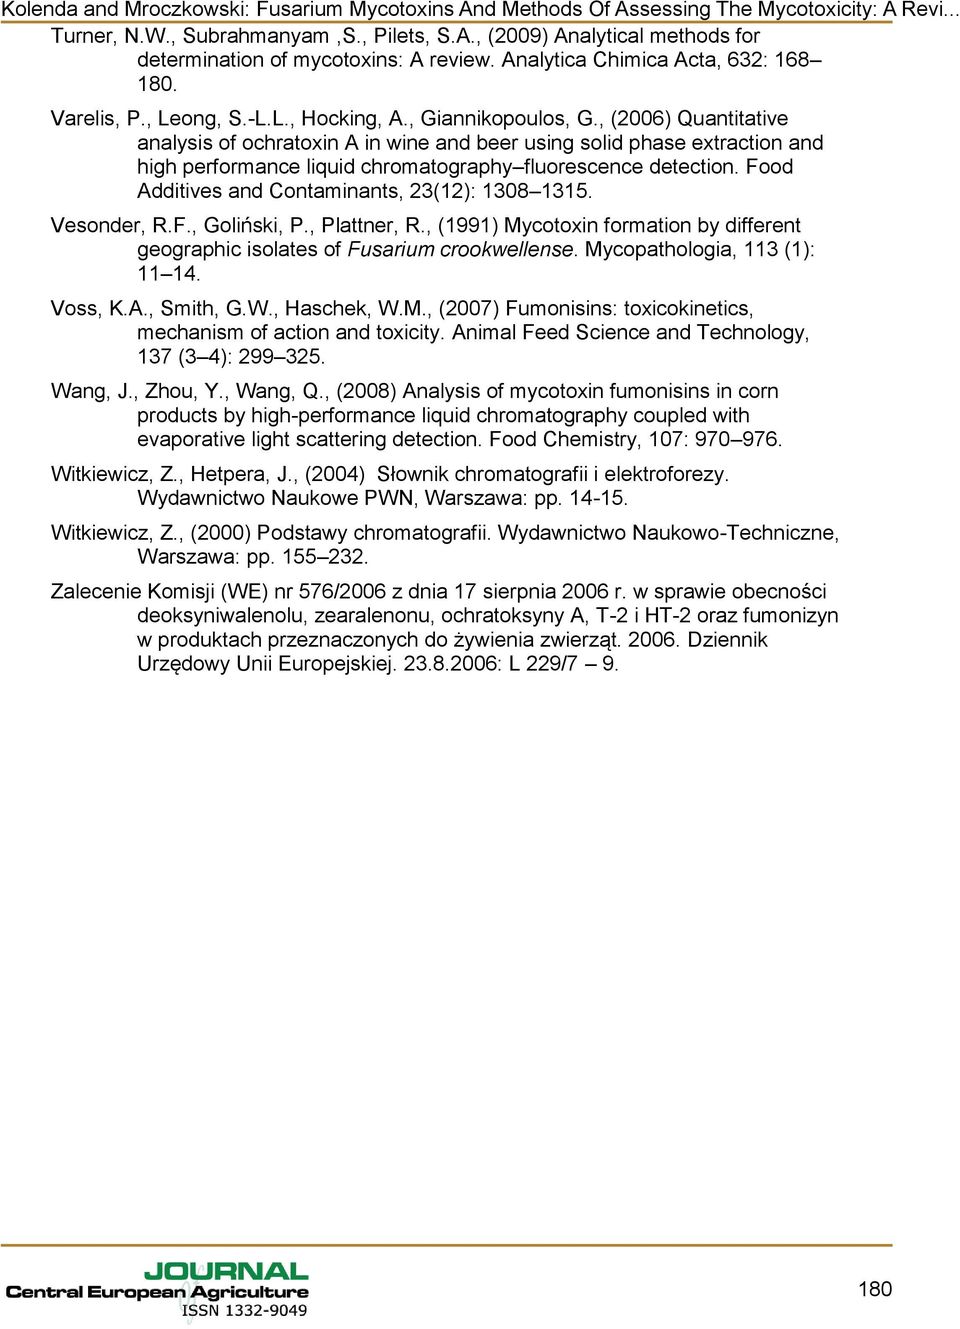 Food Additives and Contaminants, 23(12): 1308 1315. Vesonder, R.F., Goliński, P., Plattner, R., (1991) Mycotoxin formation by different geographic isolates of Fusarium crookwellense.